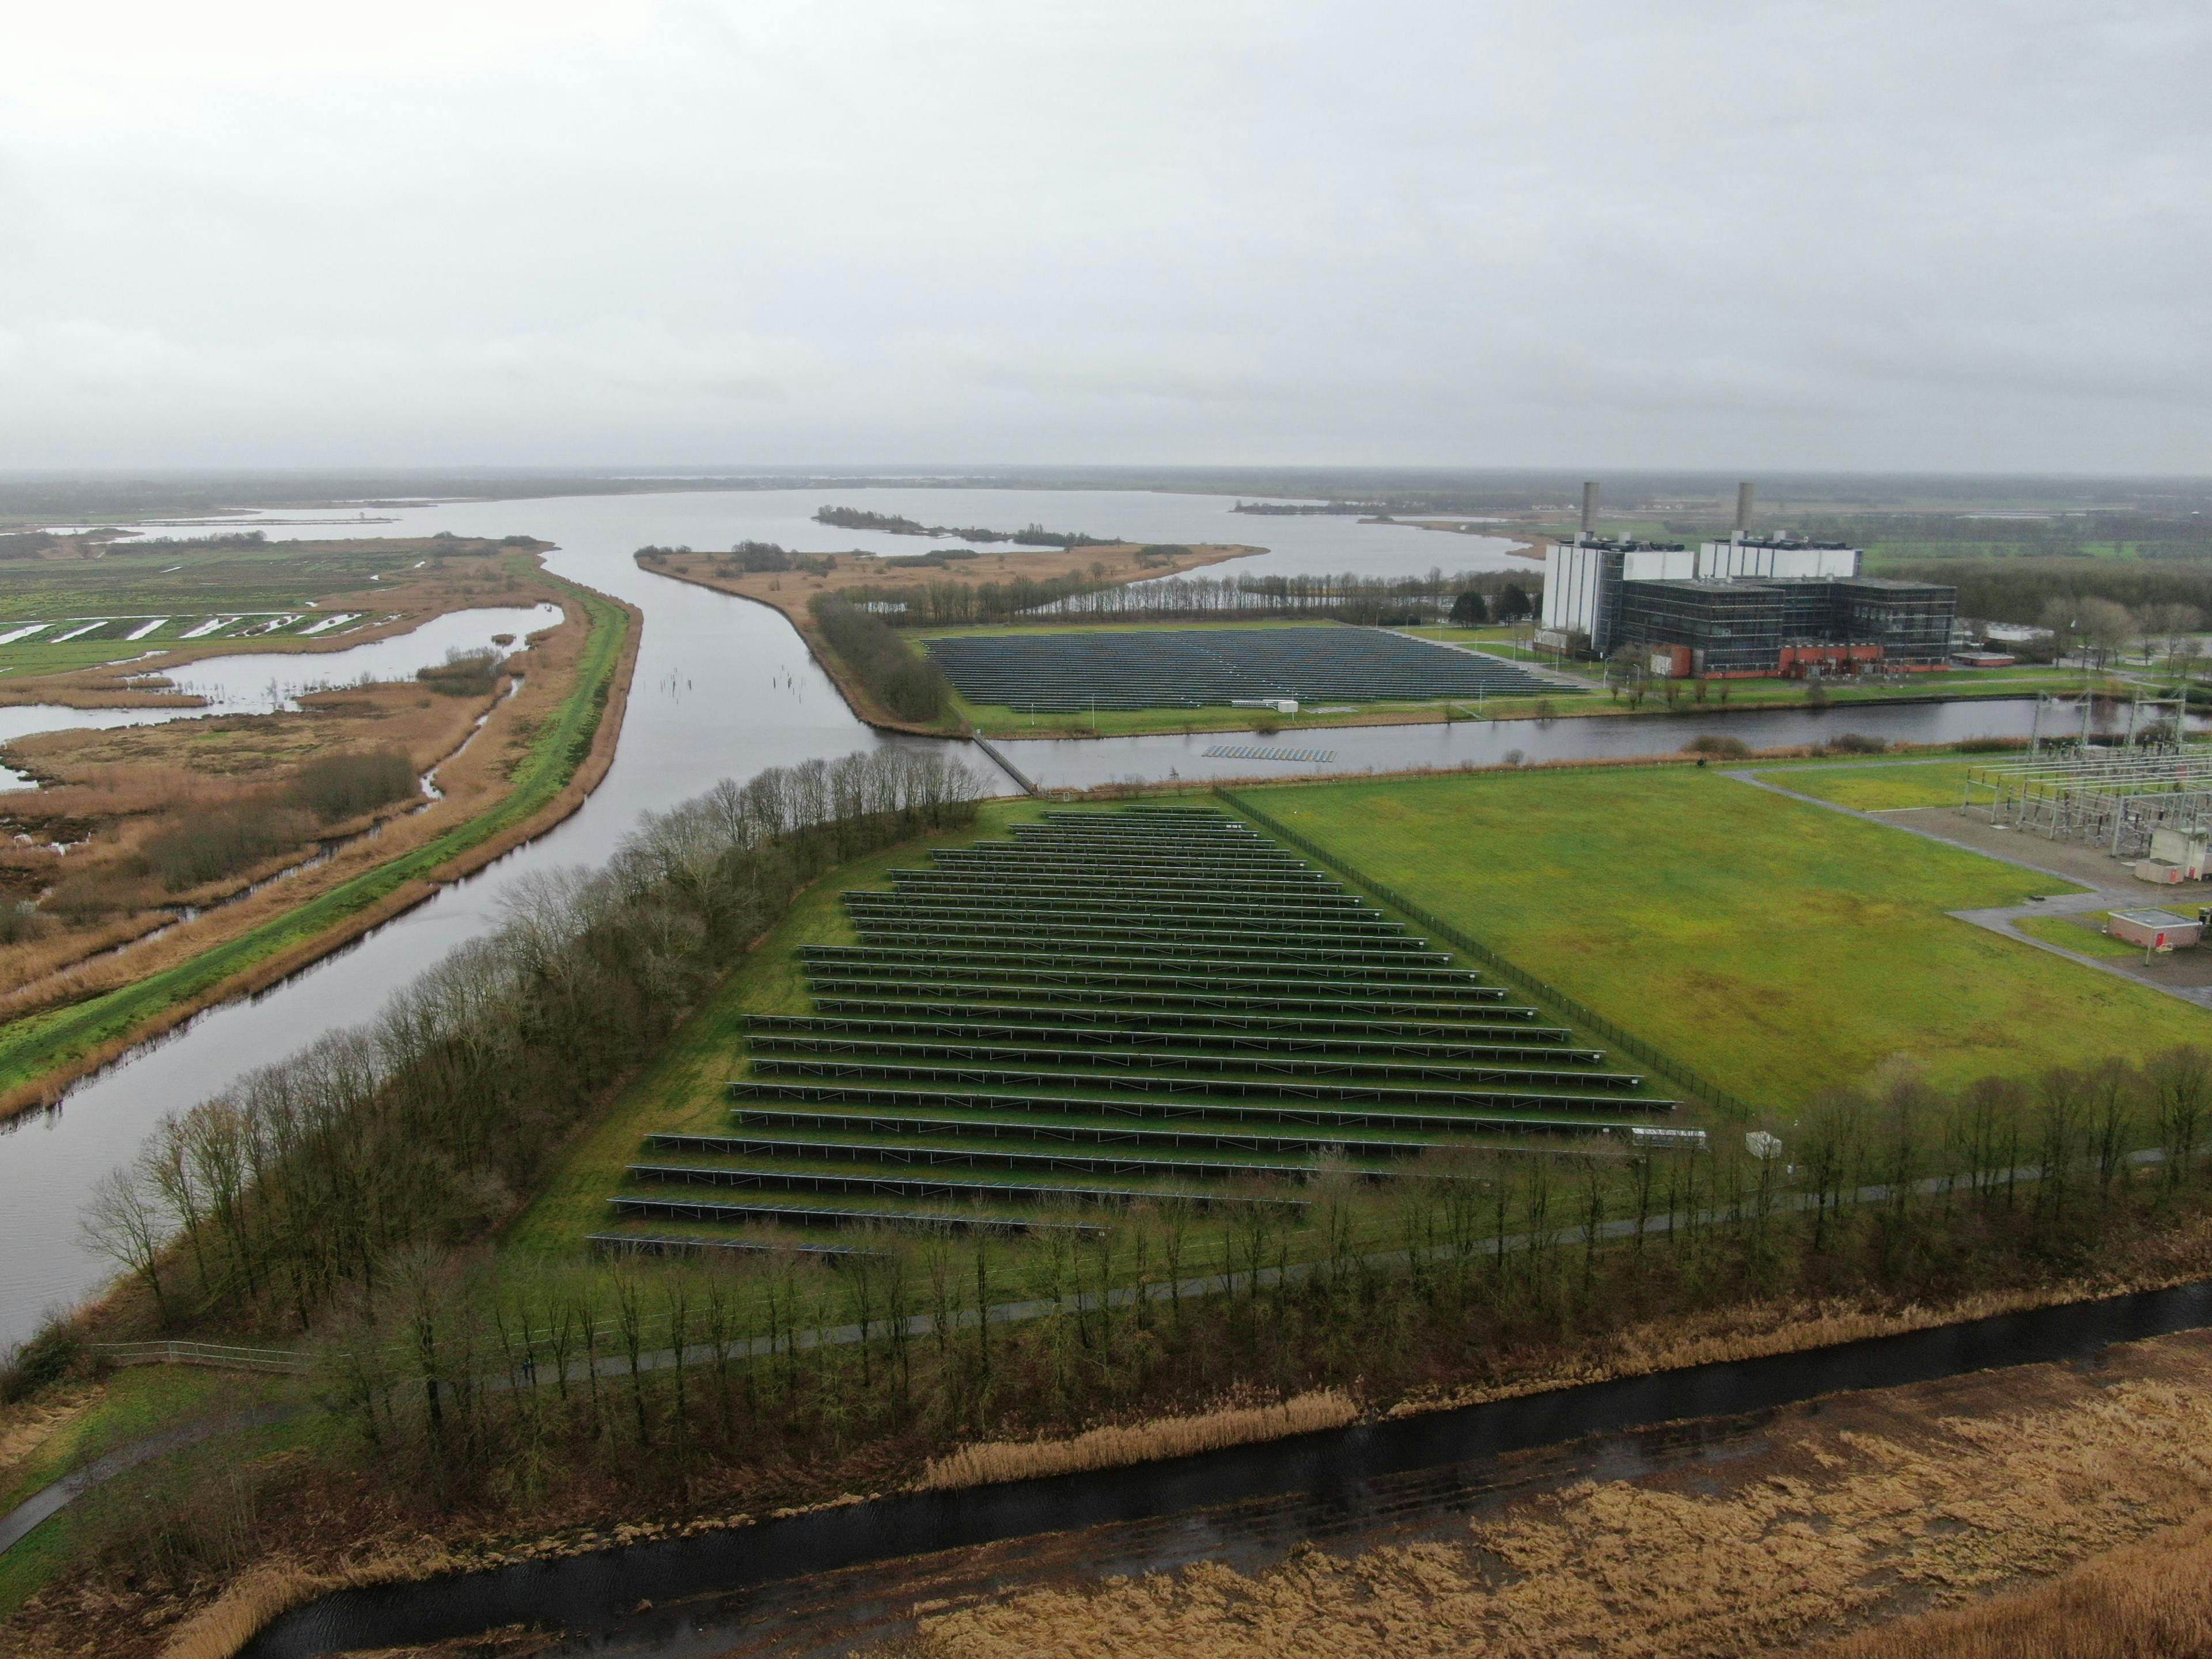 Burgum freefield project in the Netherlands, taken by drone